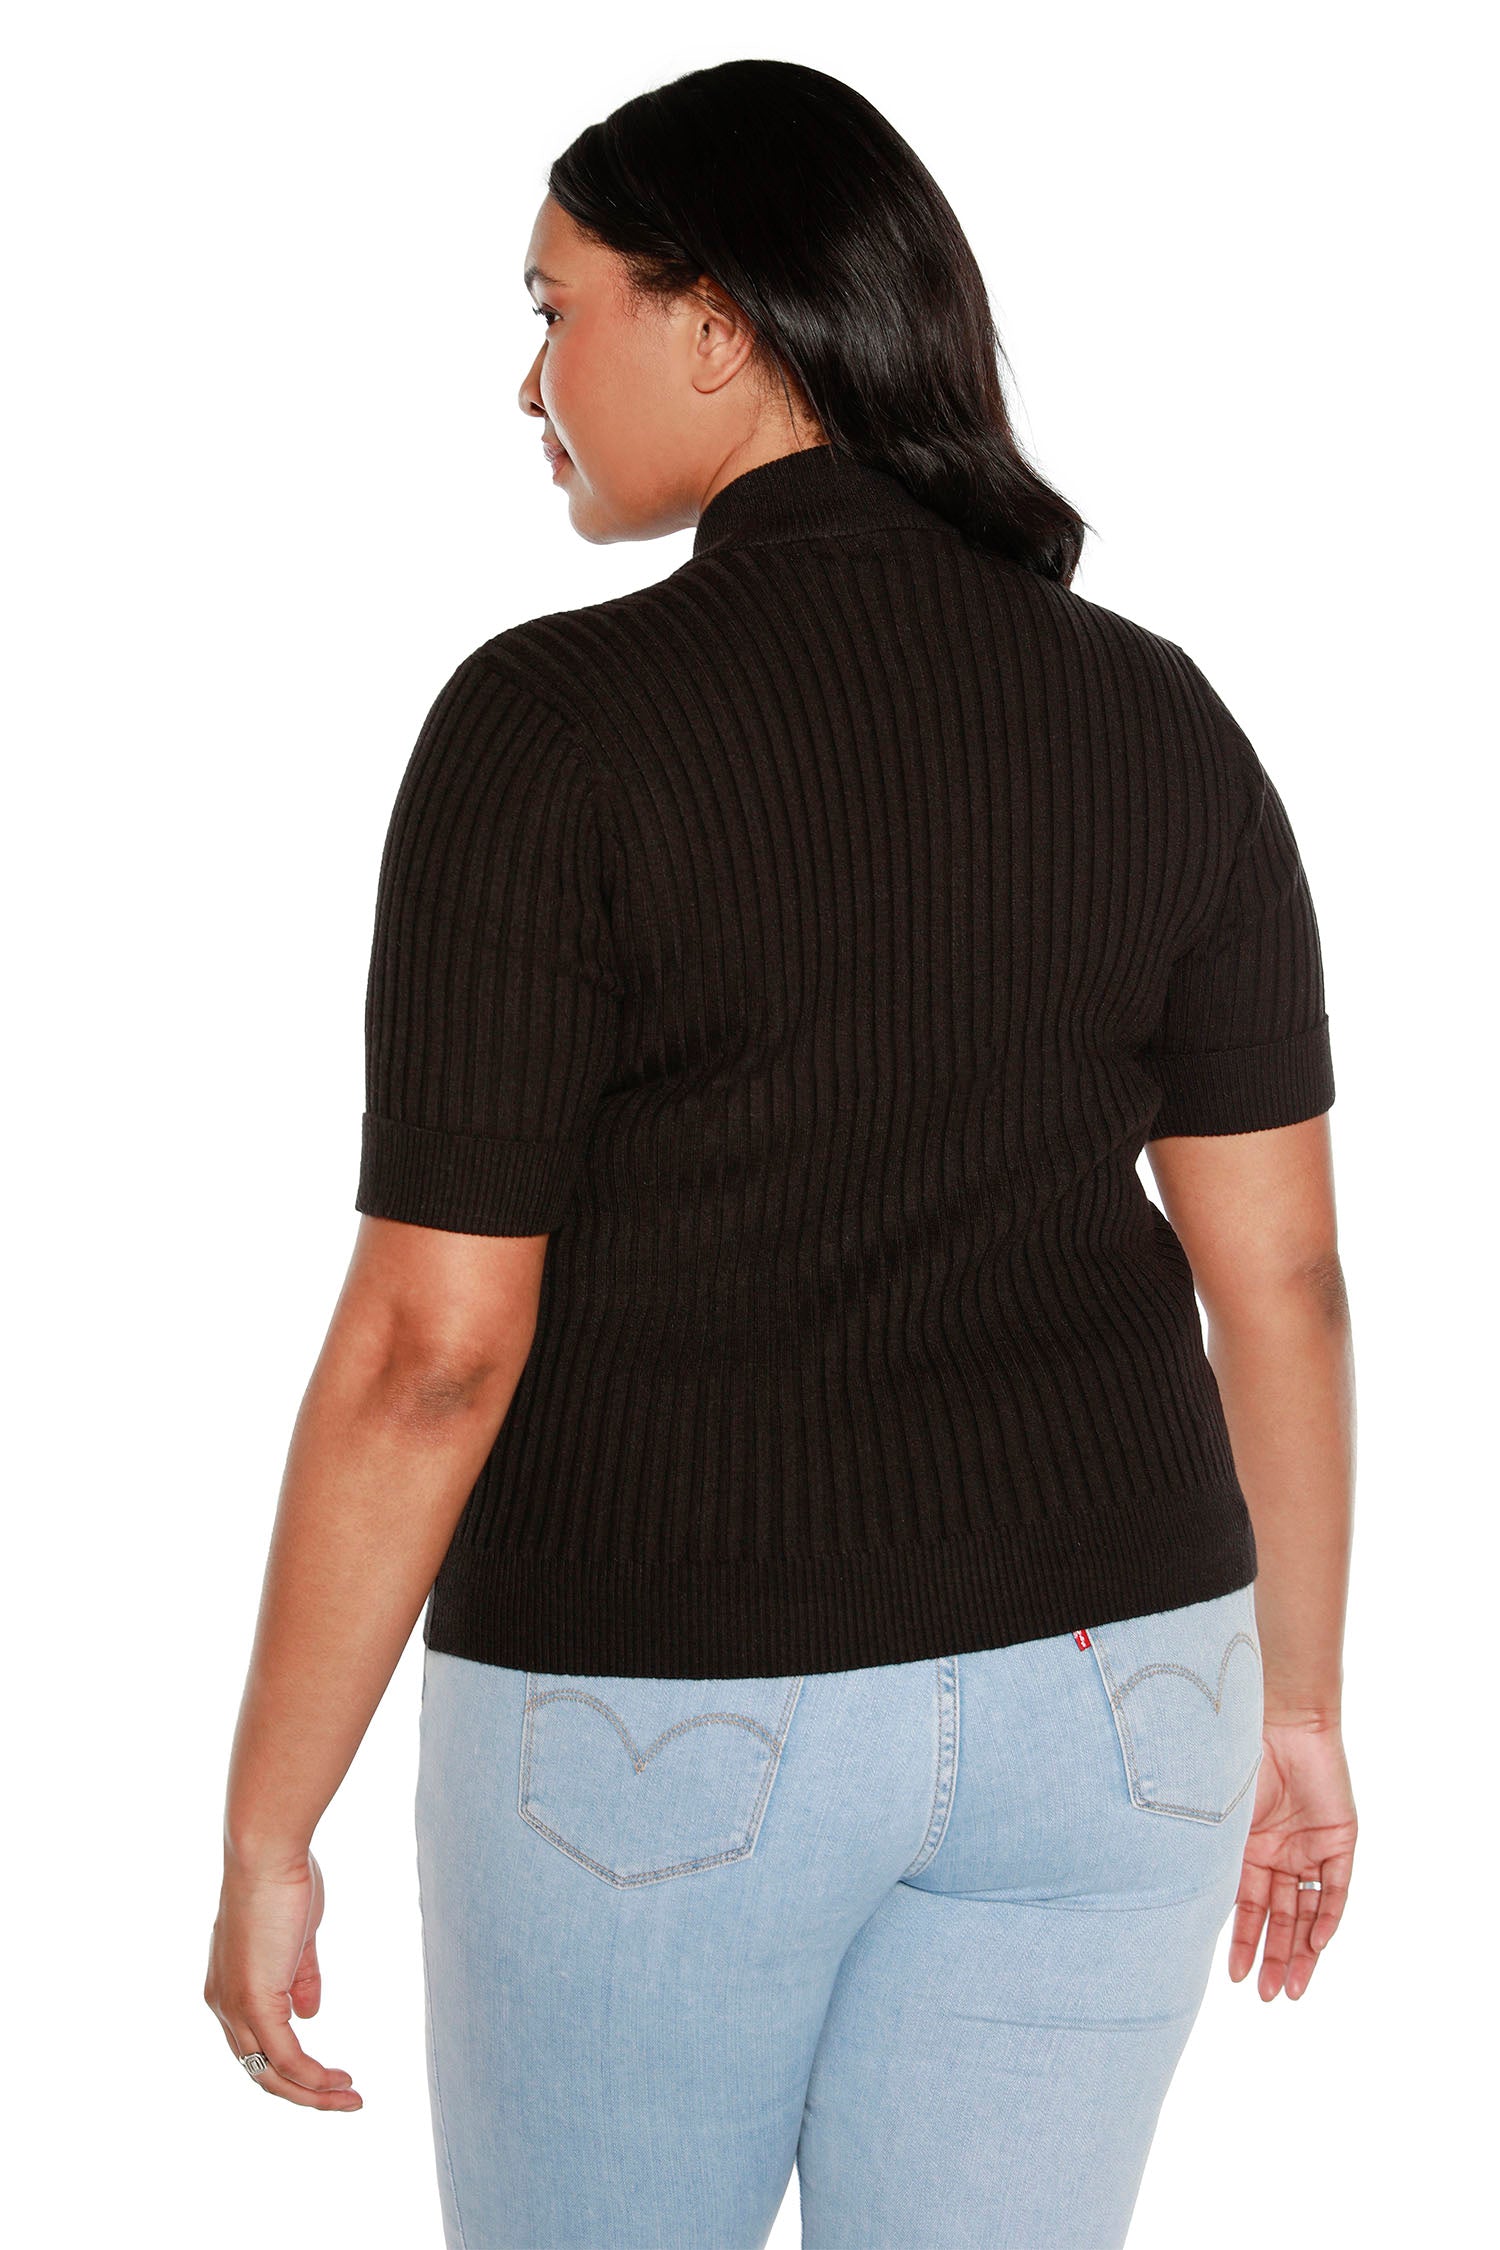 Women's Quarter Length Zipper Polo with Mock Collar | Curvy